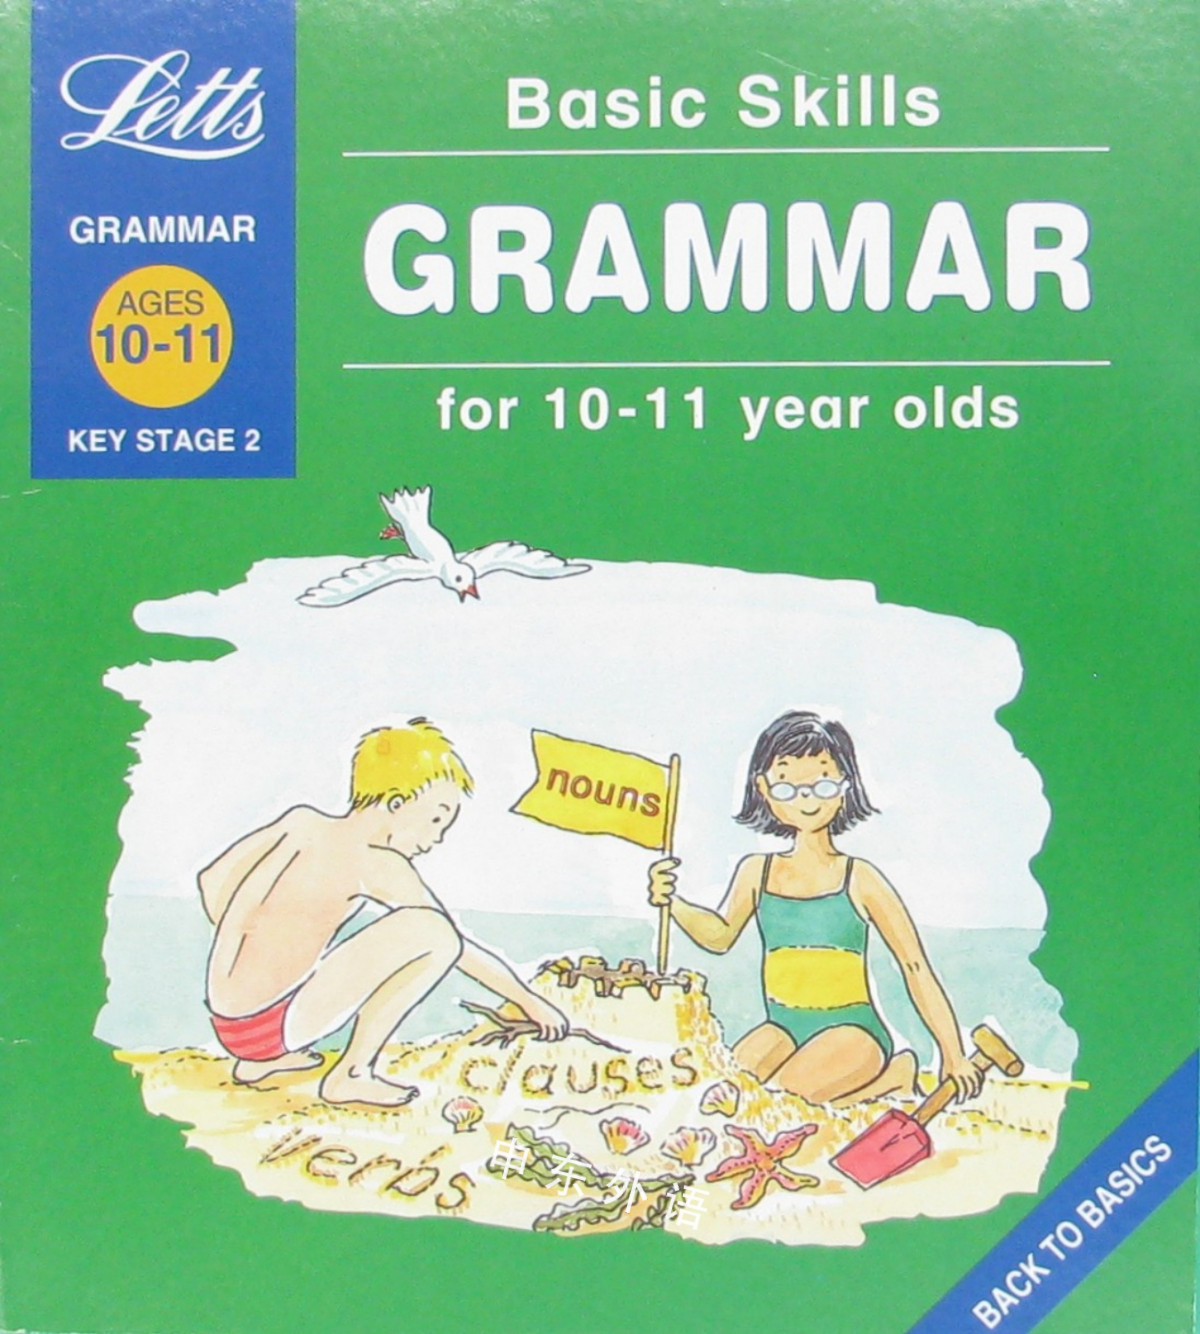 basic-skills-grammar-for-10-11-year-olds-key-stage-2